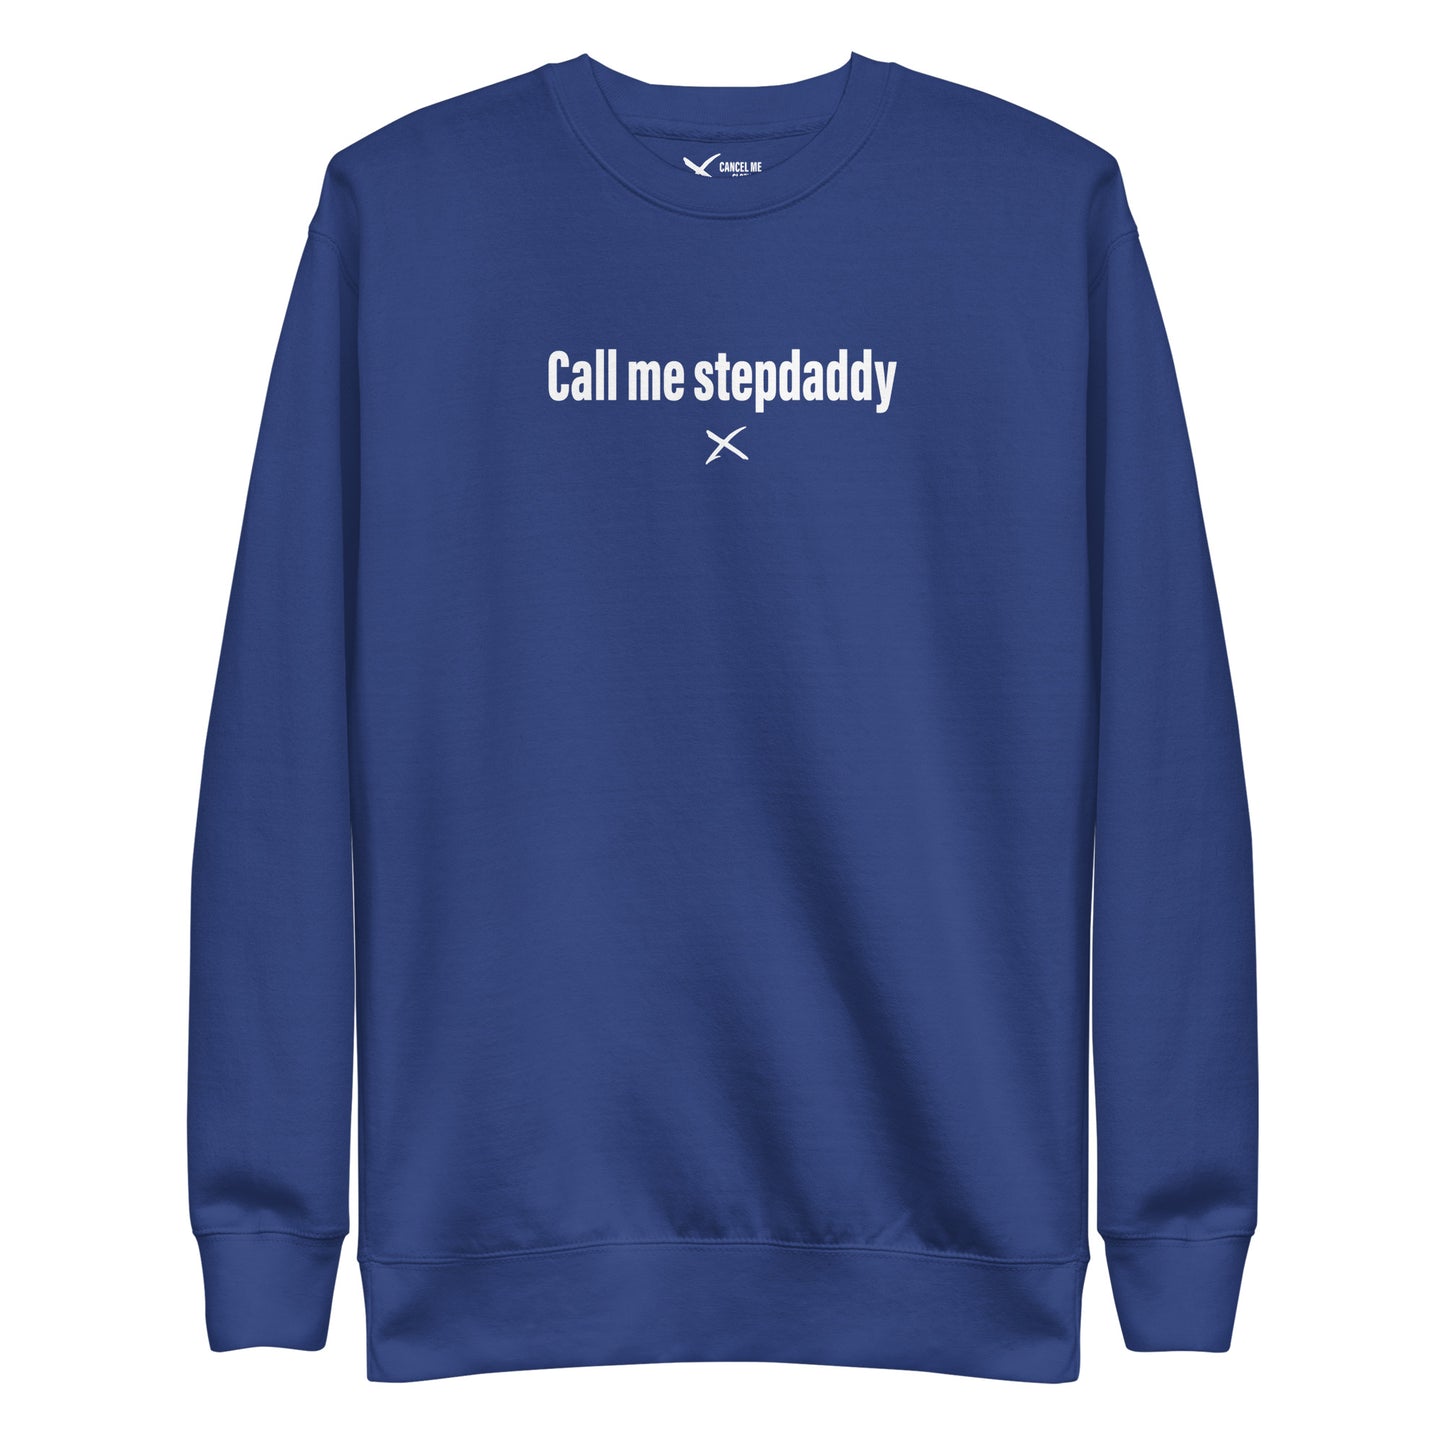 Call me stepdaddy - Sweatshirt